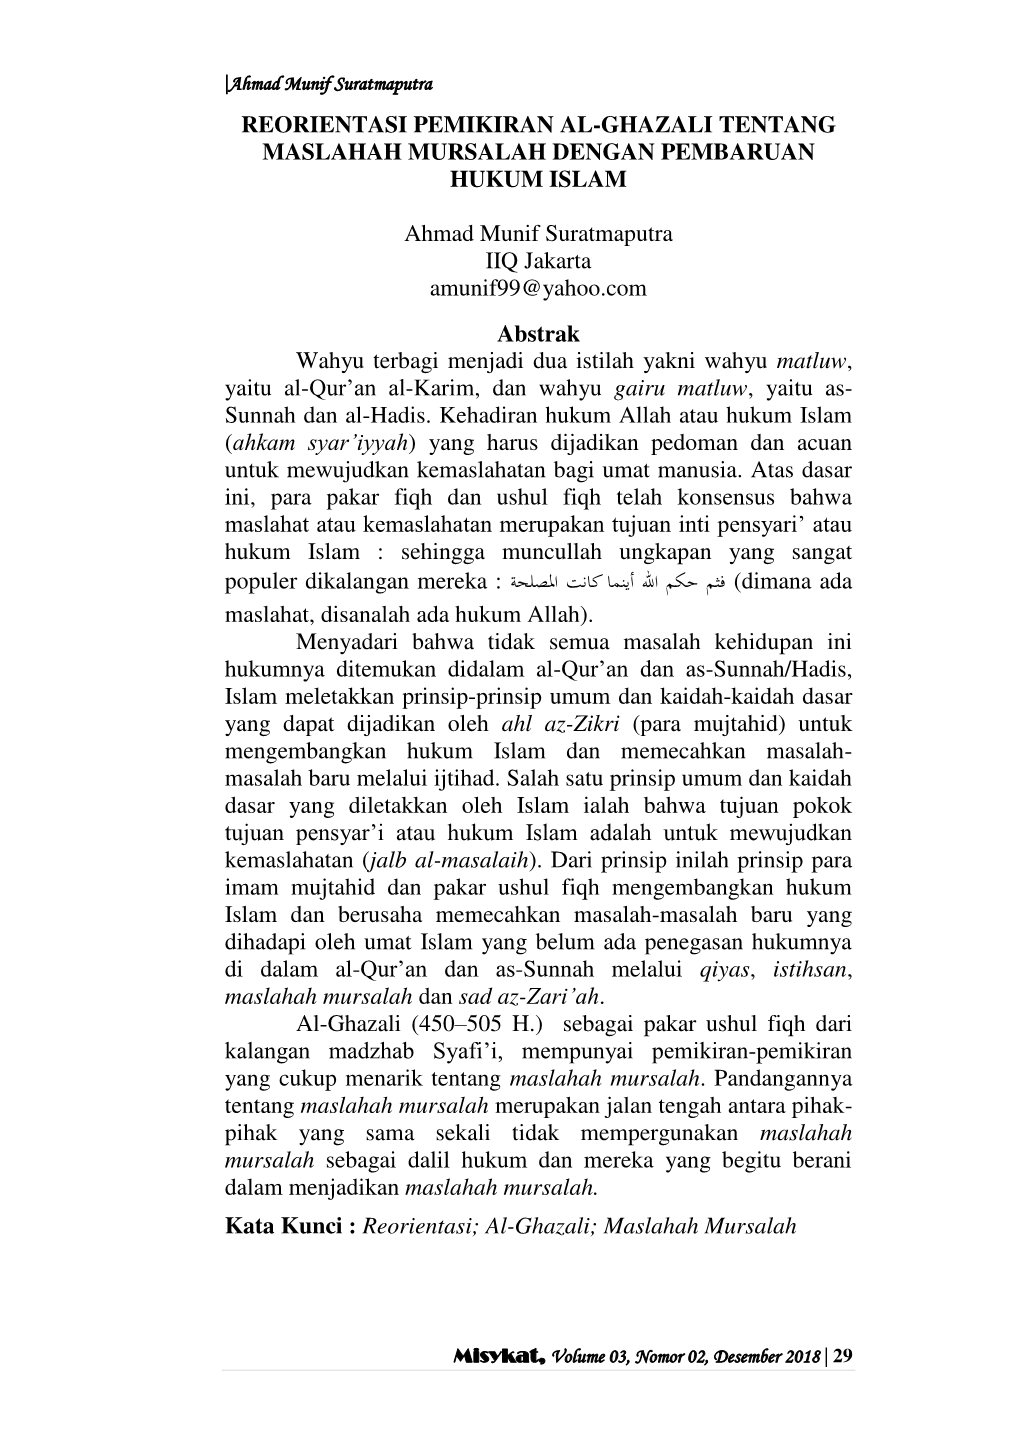 REORIENTASI PEMIKIRAN AL-GHAZALI TENTANG MASLAHAH MURSALAH DENGAN PEMBARUAN HUKUM ISLAM Ahmad Munif Suratmaputra IIQ Jakarta